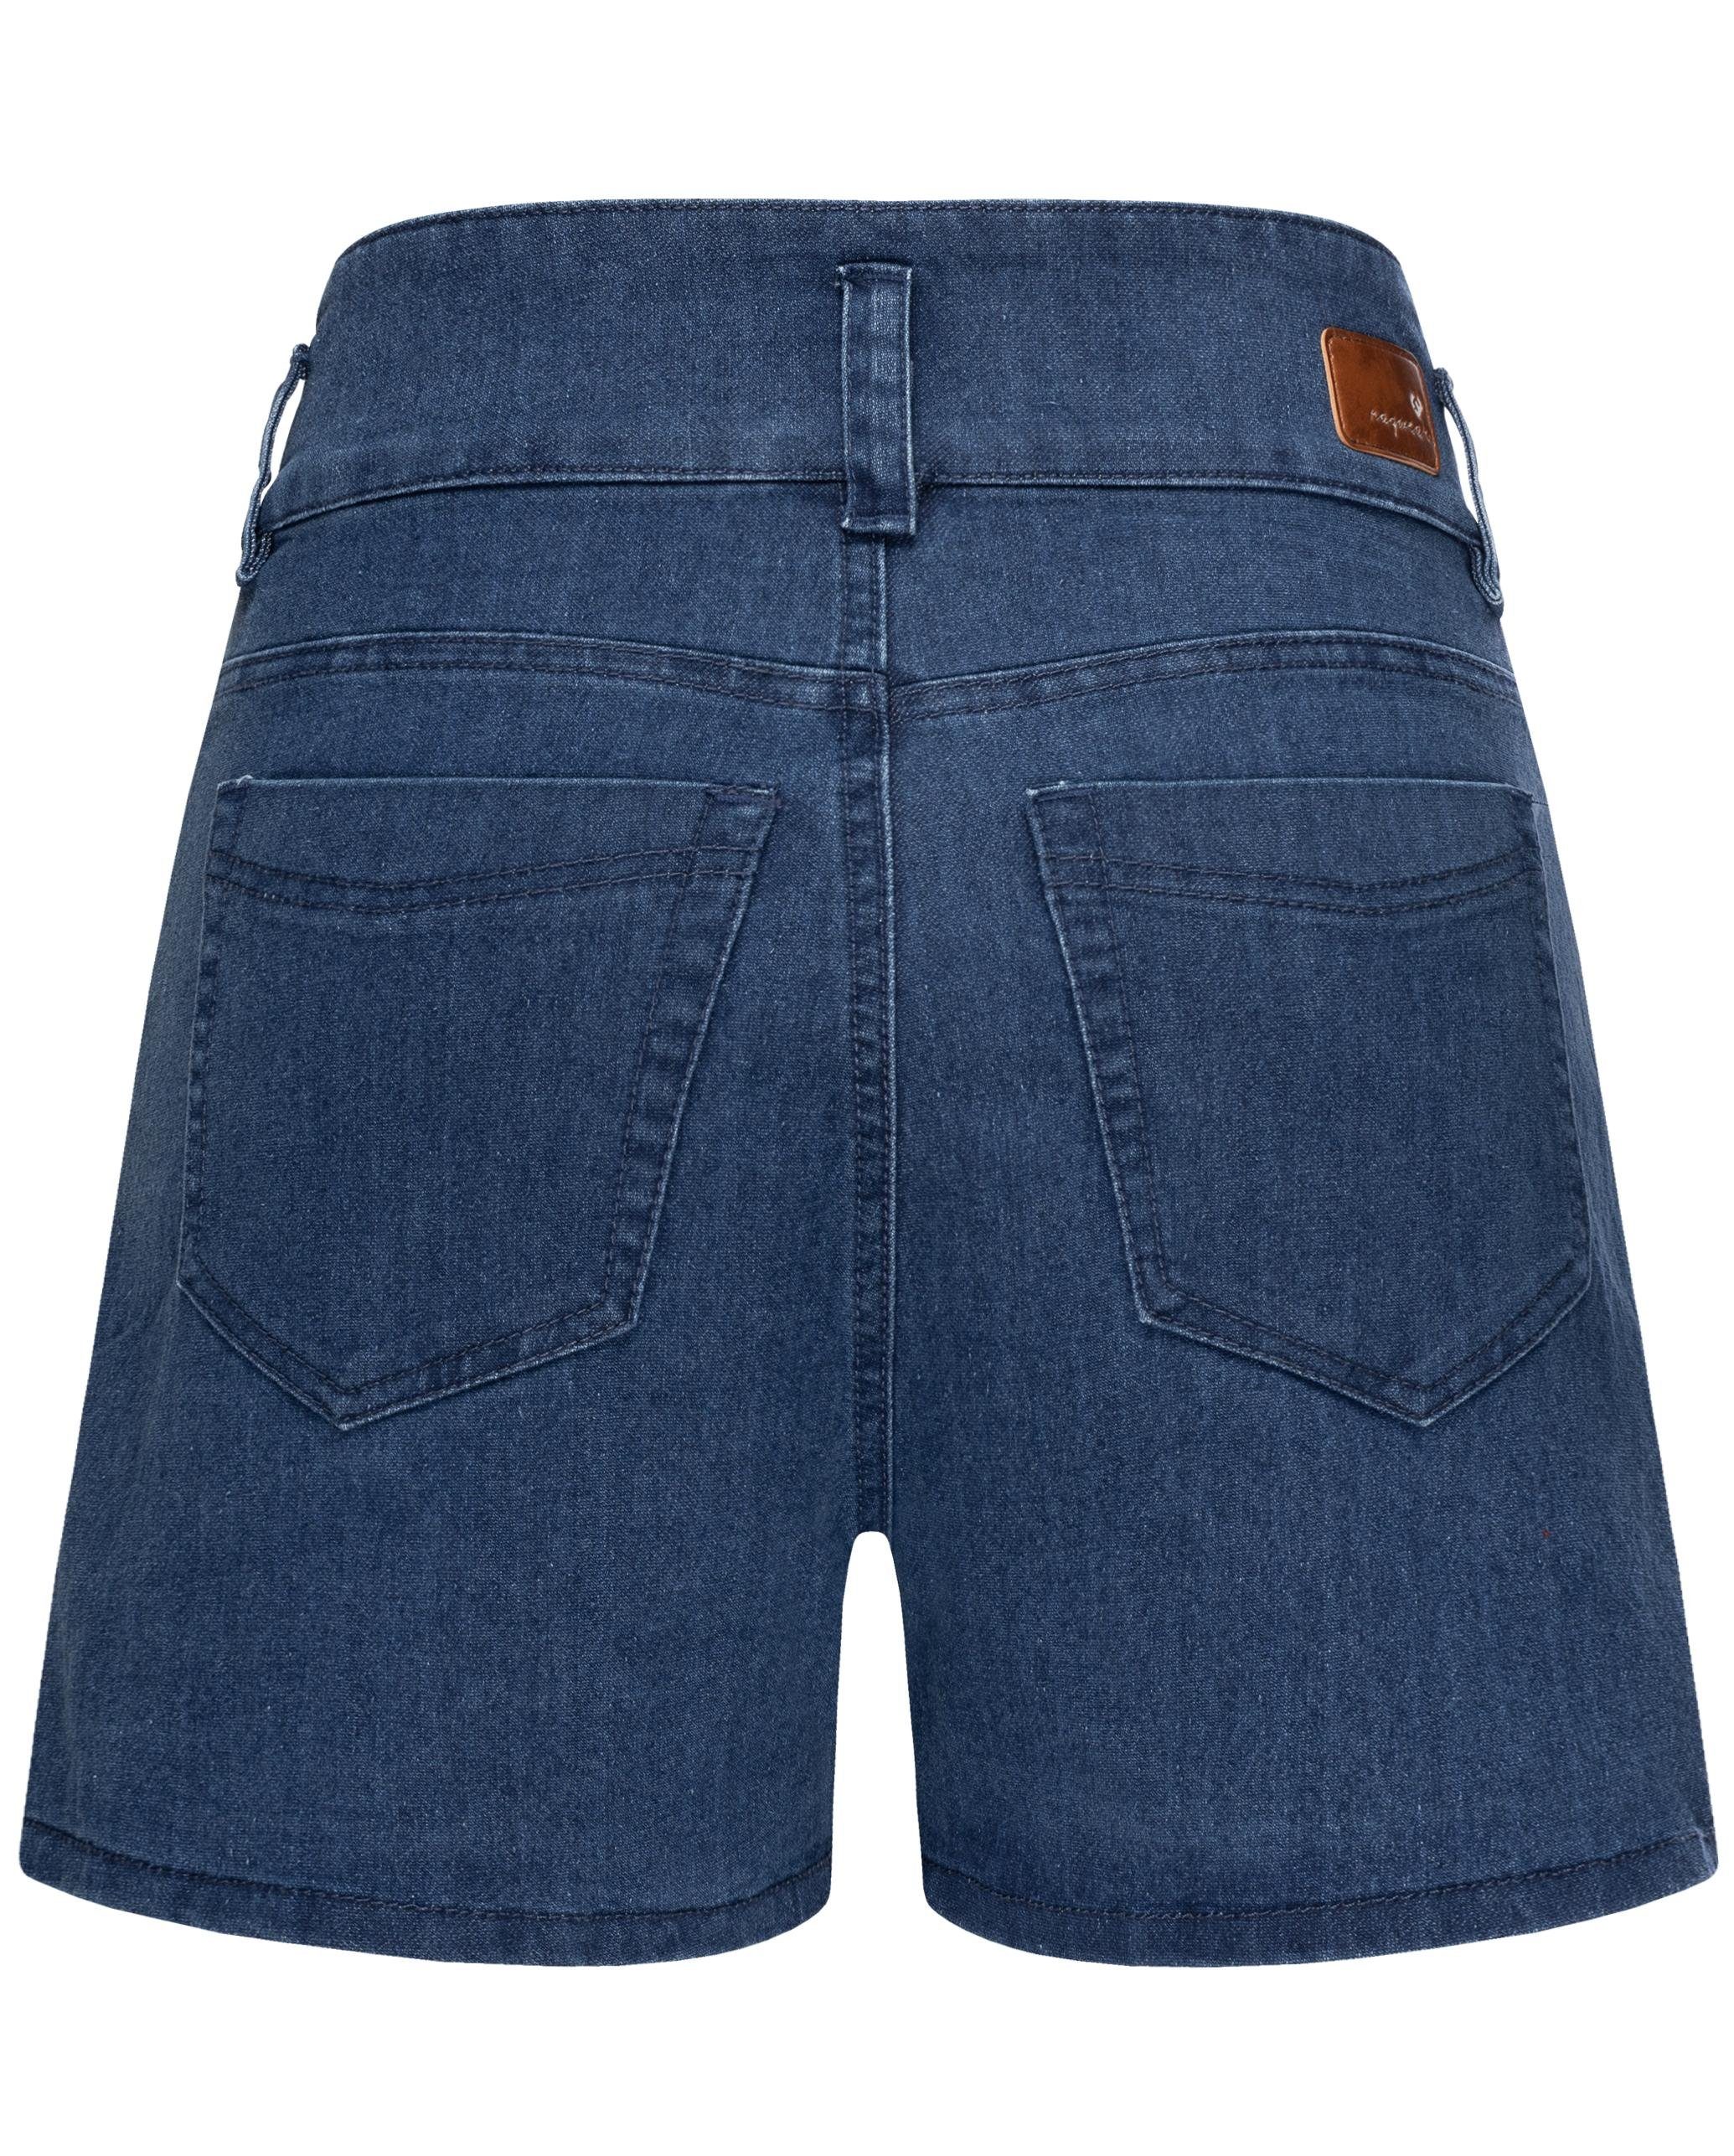 Ragwear Shorts Suzzie stylische, indigo in Jeansoptik kurze Sommerhose